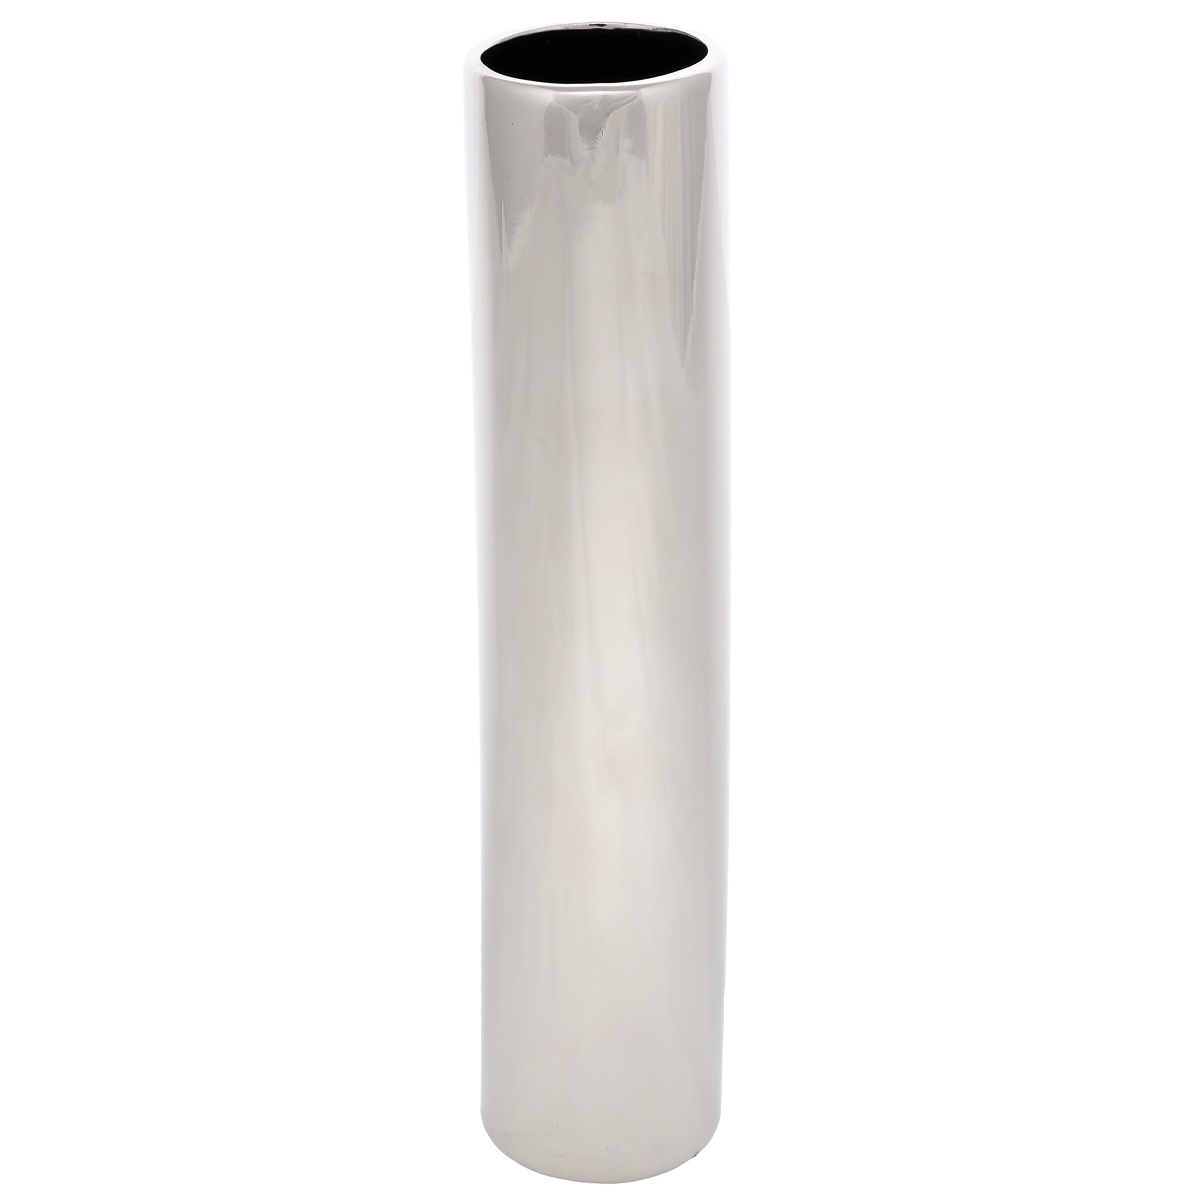 Poza Vaza ceramica Tube, 5 x 24 x 5 cm, argintiu